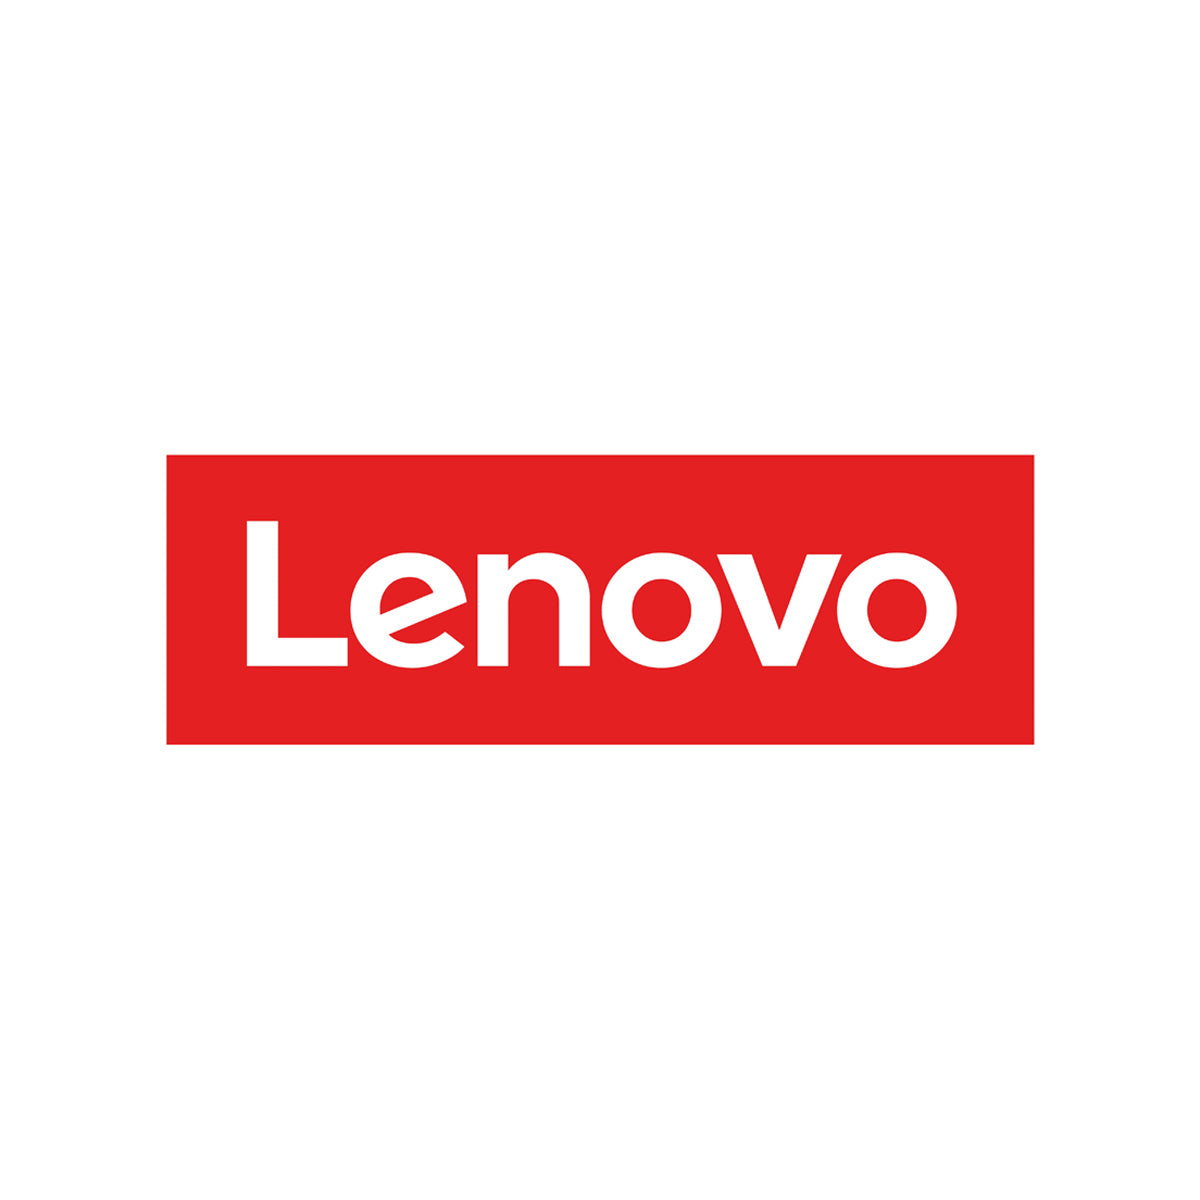 Lenovo Refurbished Computers